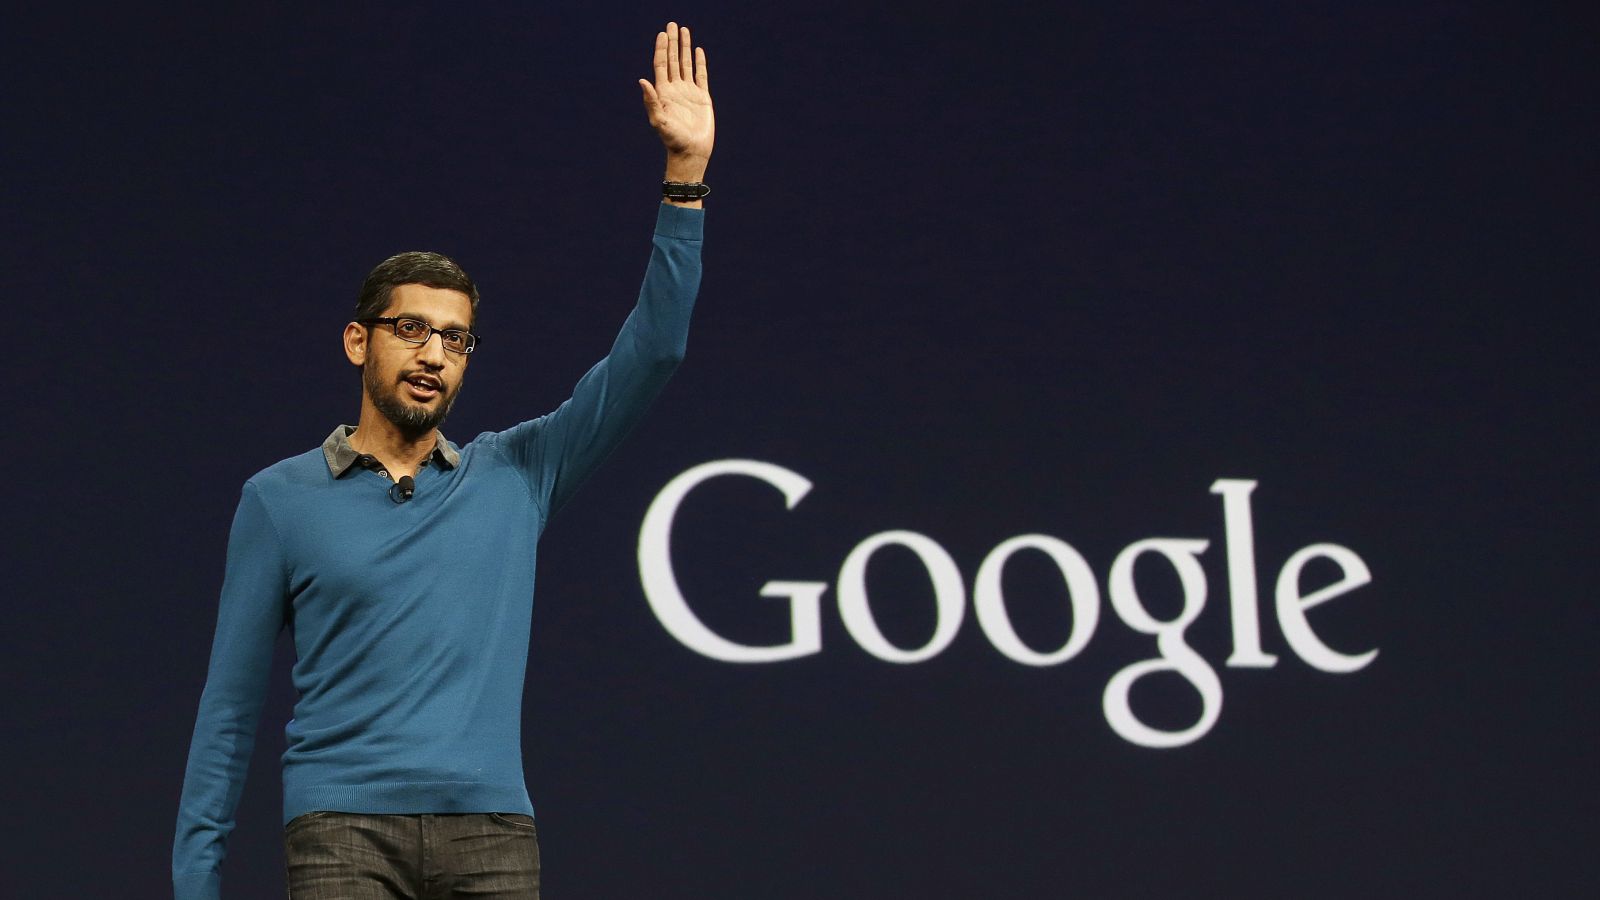 Sundar Pichai said a Google AI model developed unexpected skills